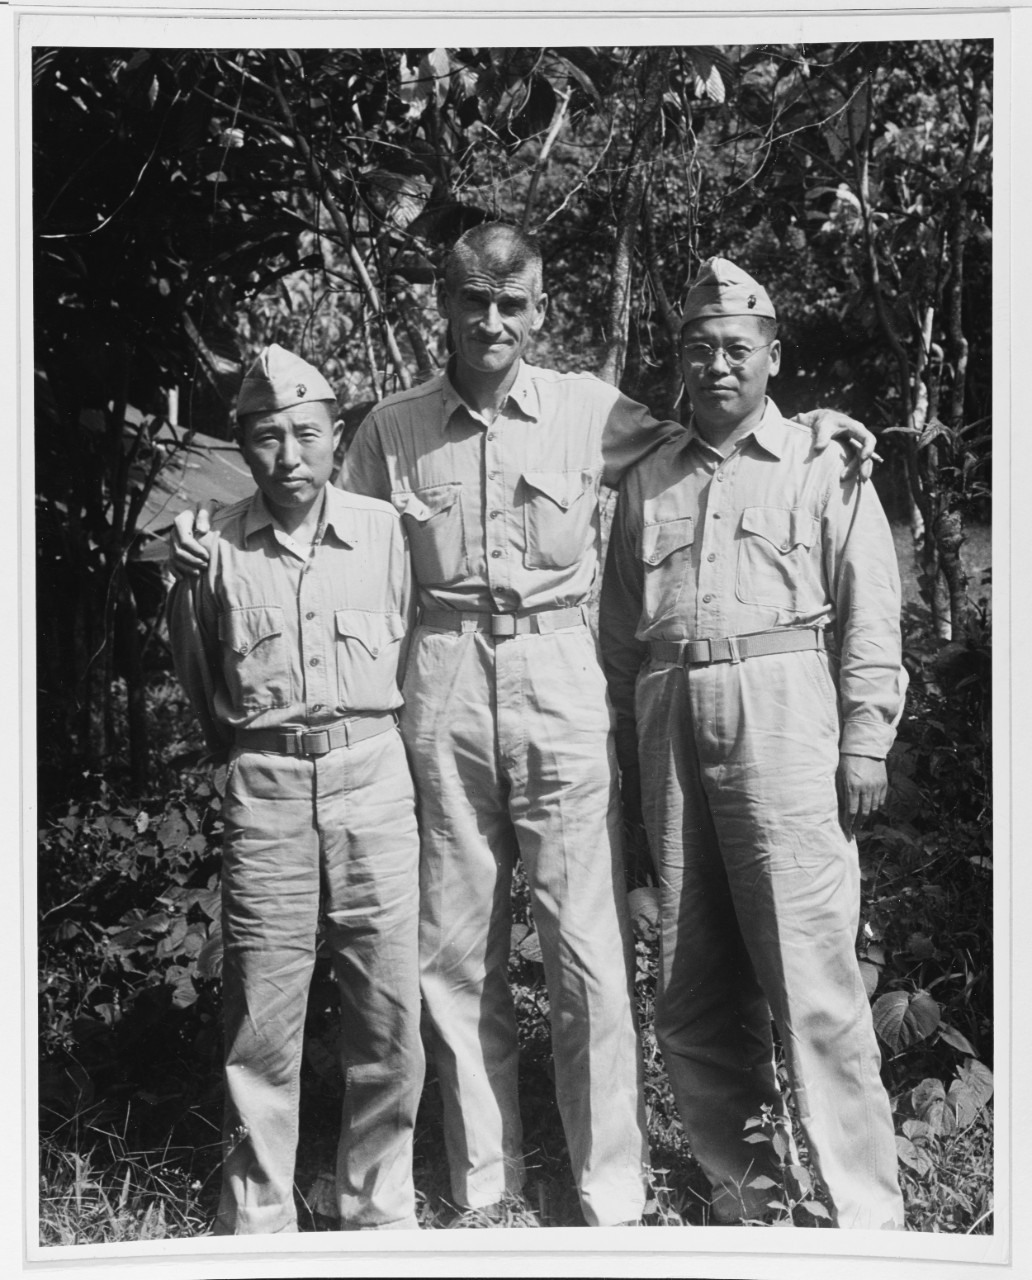 Lieutenant Colonel Evans F. Carlson, CO, Second Marine Raider Battalion with two Korean scout-interpreters